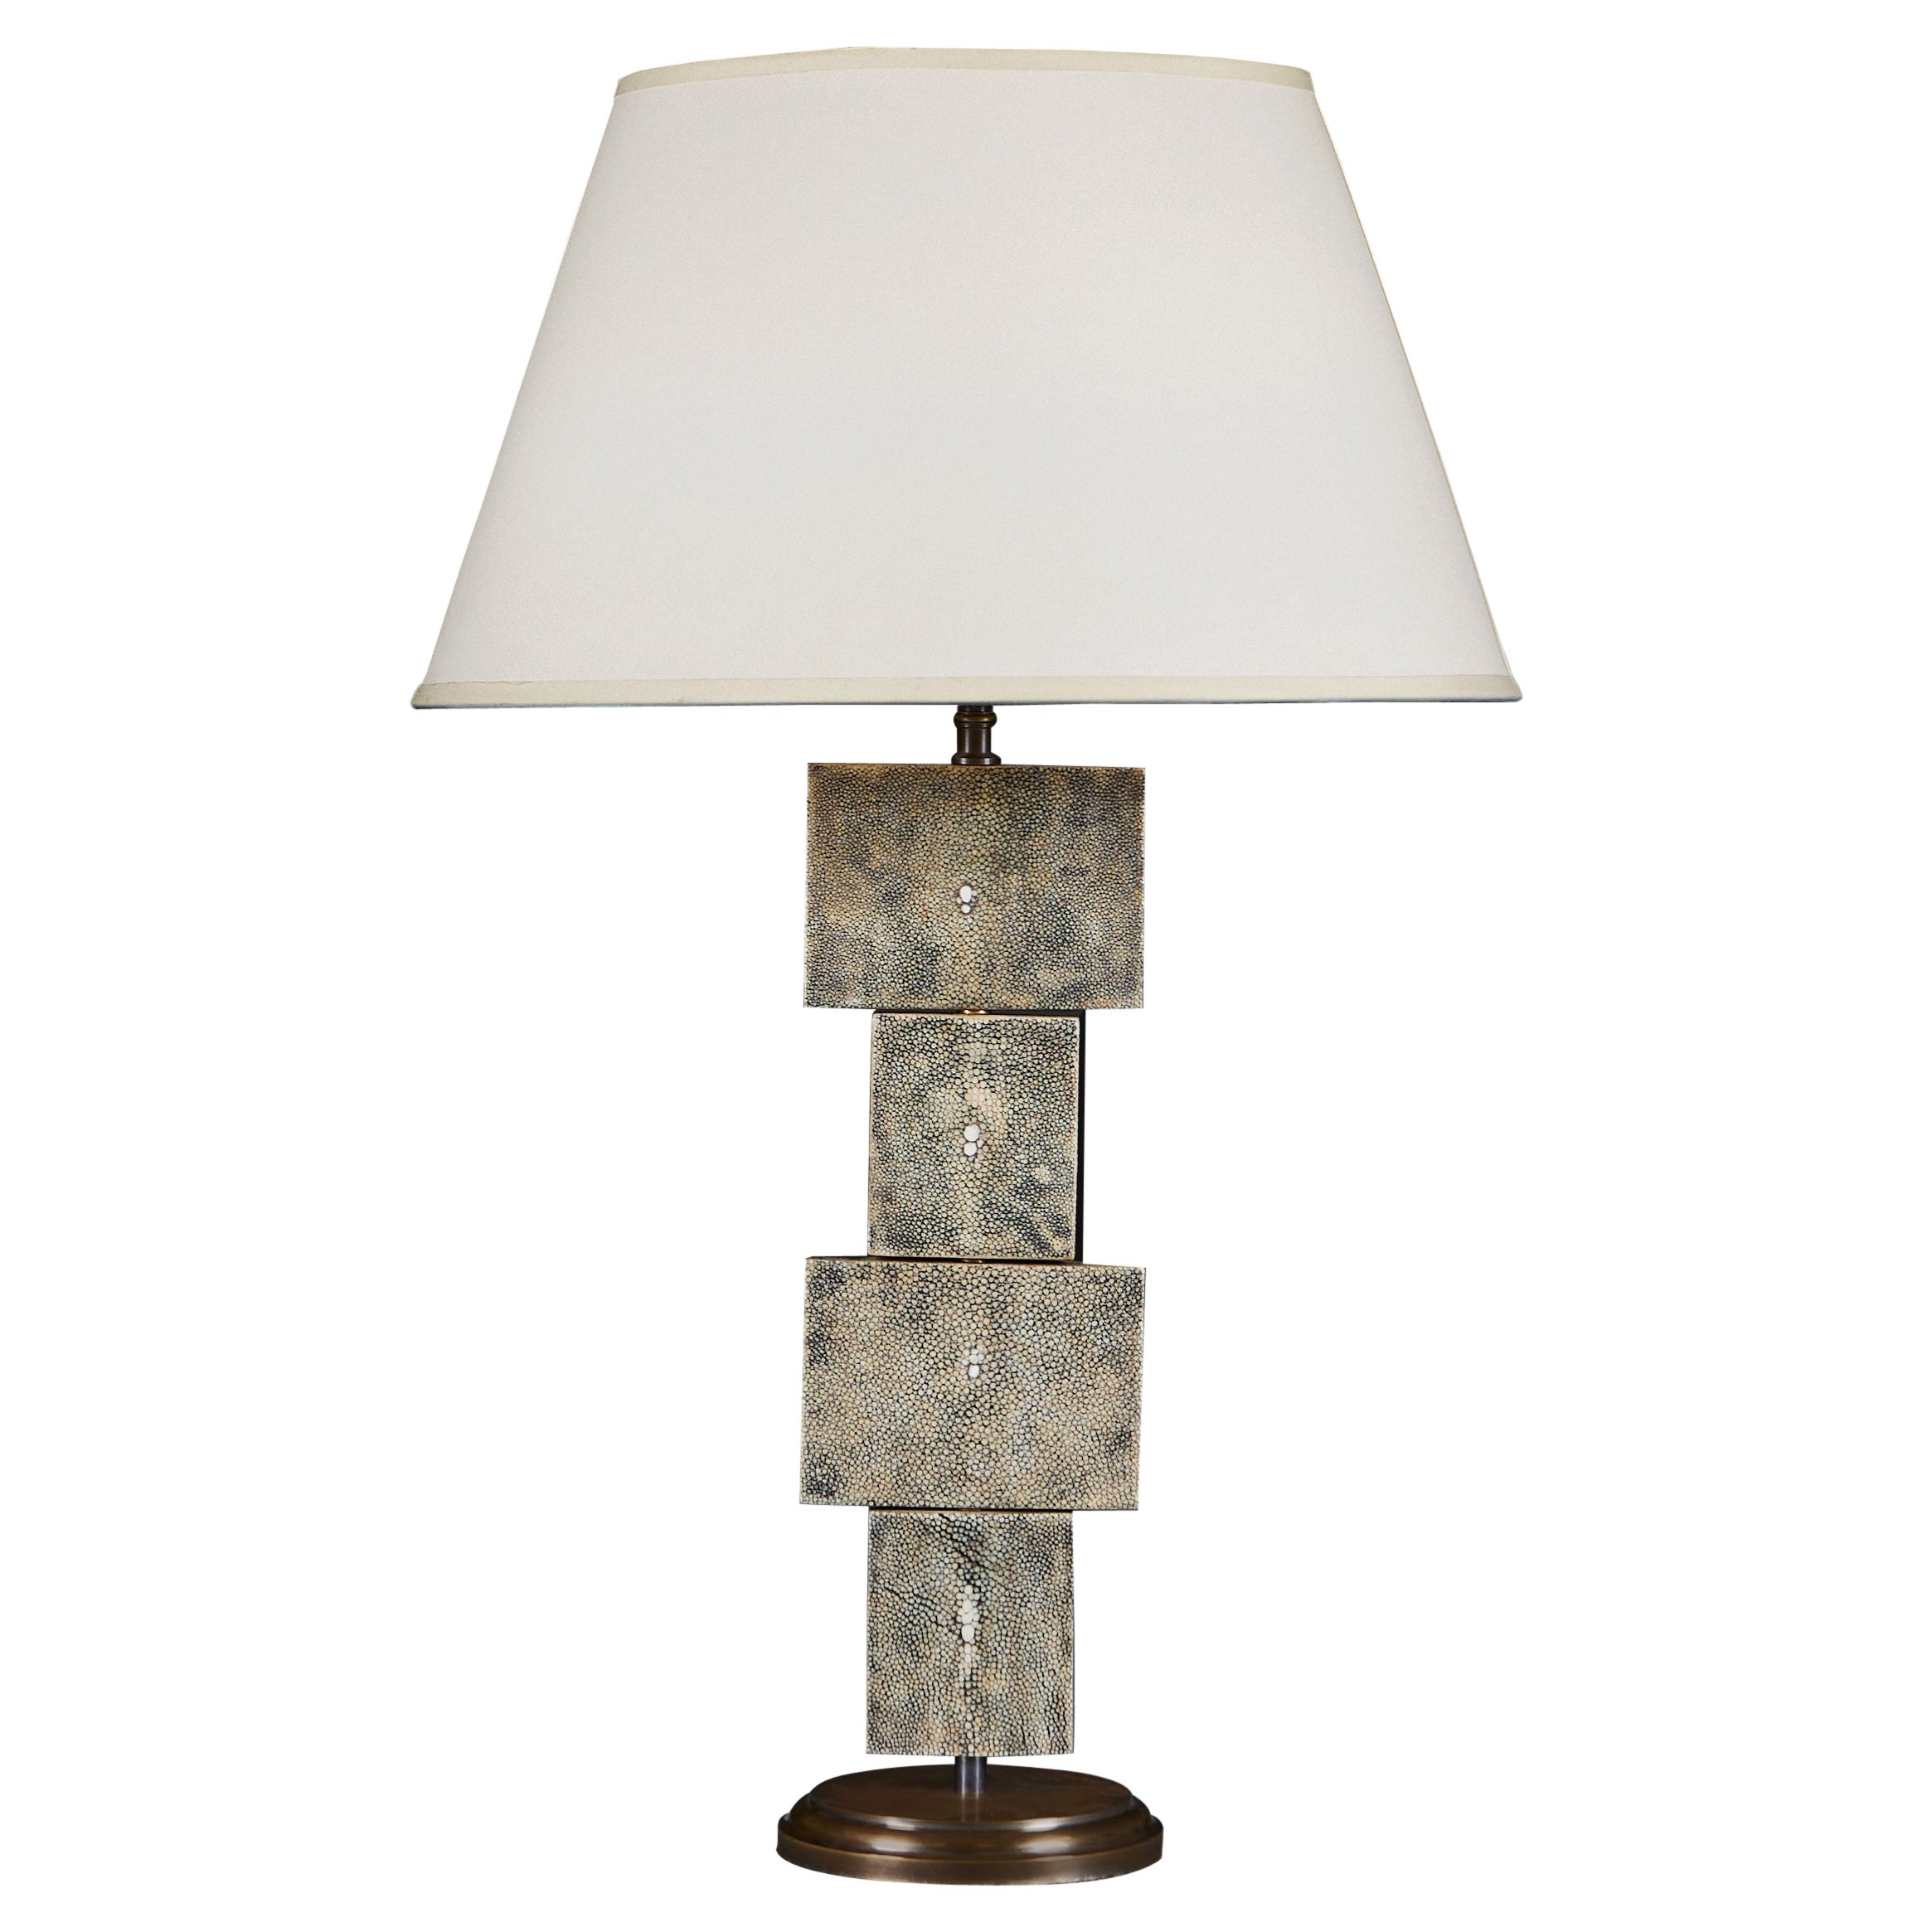 A Shagreen Table Lamp